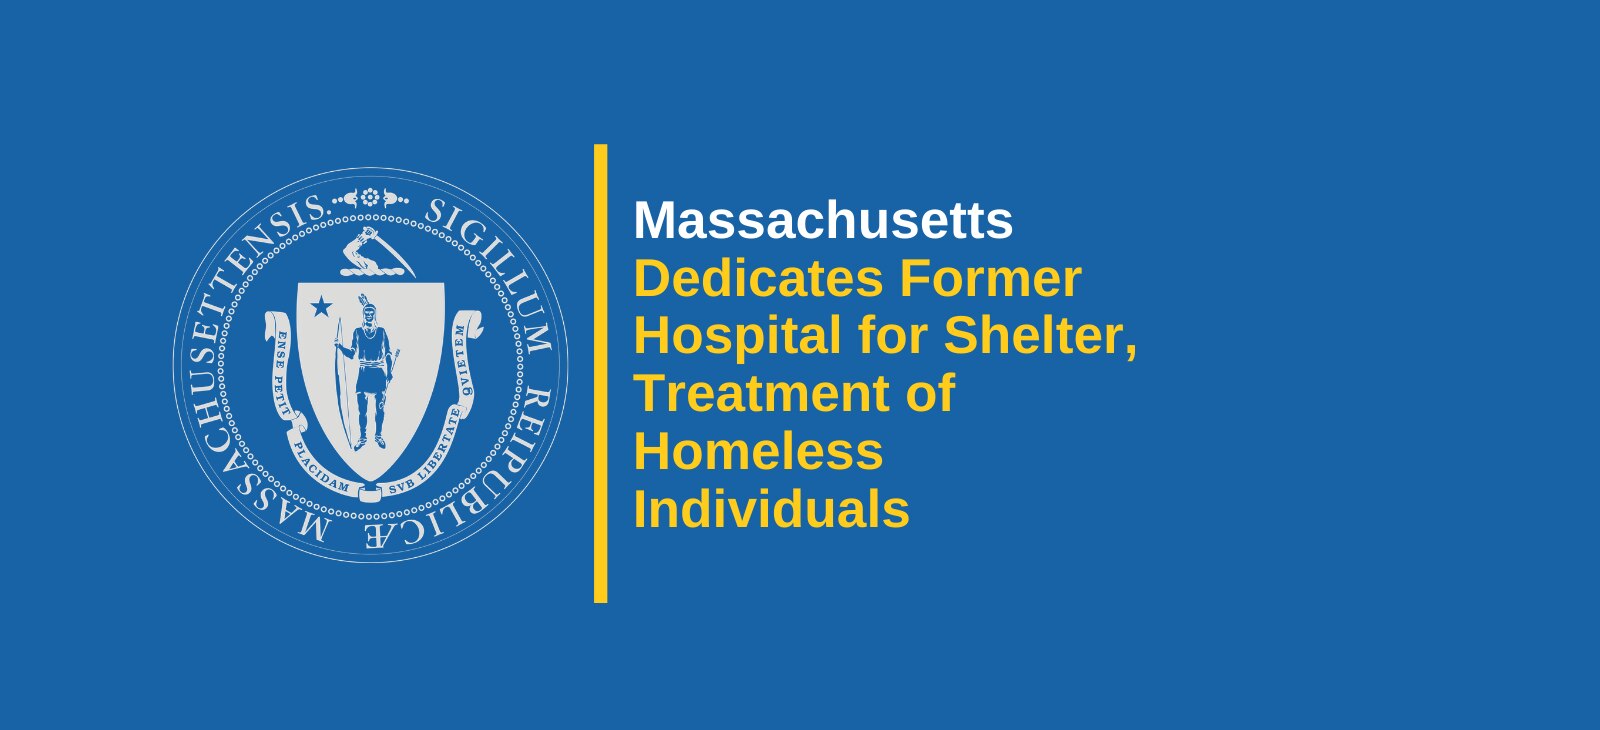 Massachusetts Dedicates Former Hospital for Shelter, Treatment of Homeless Individuals